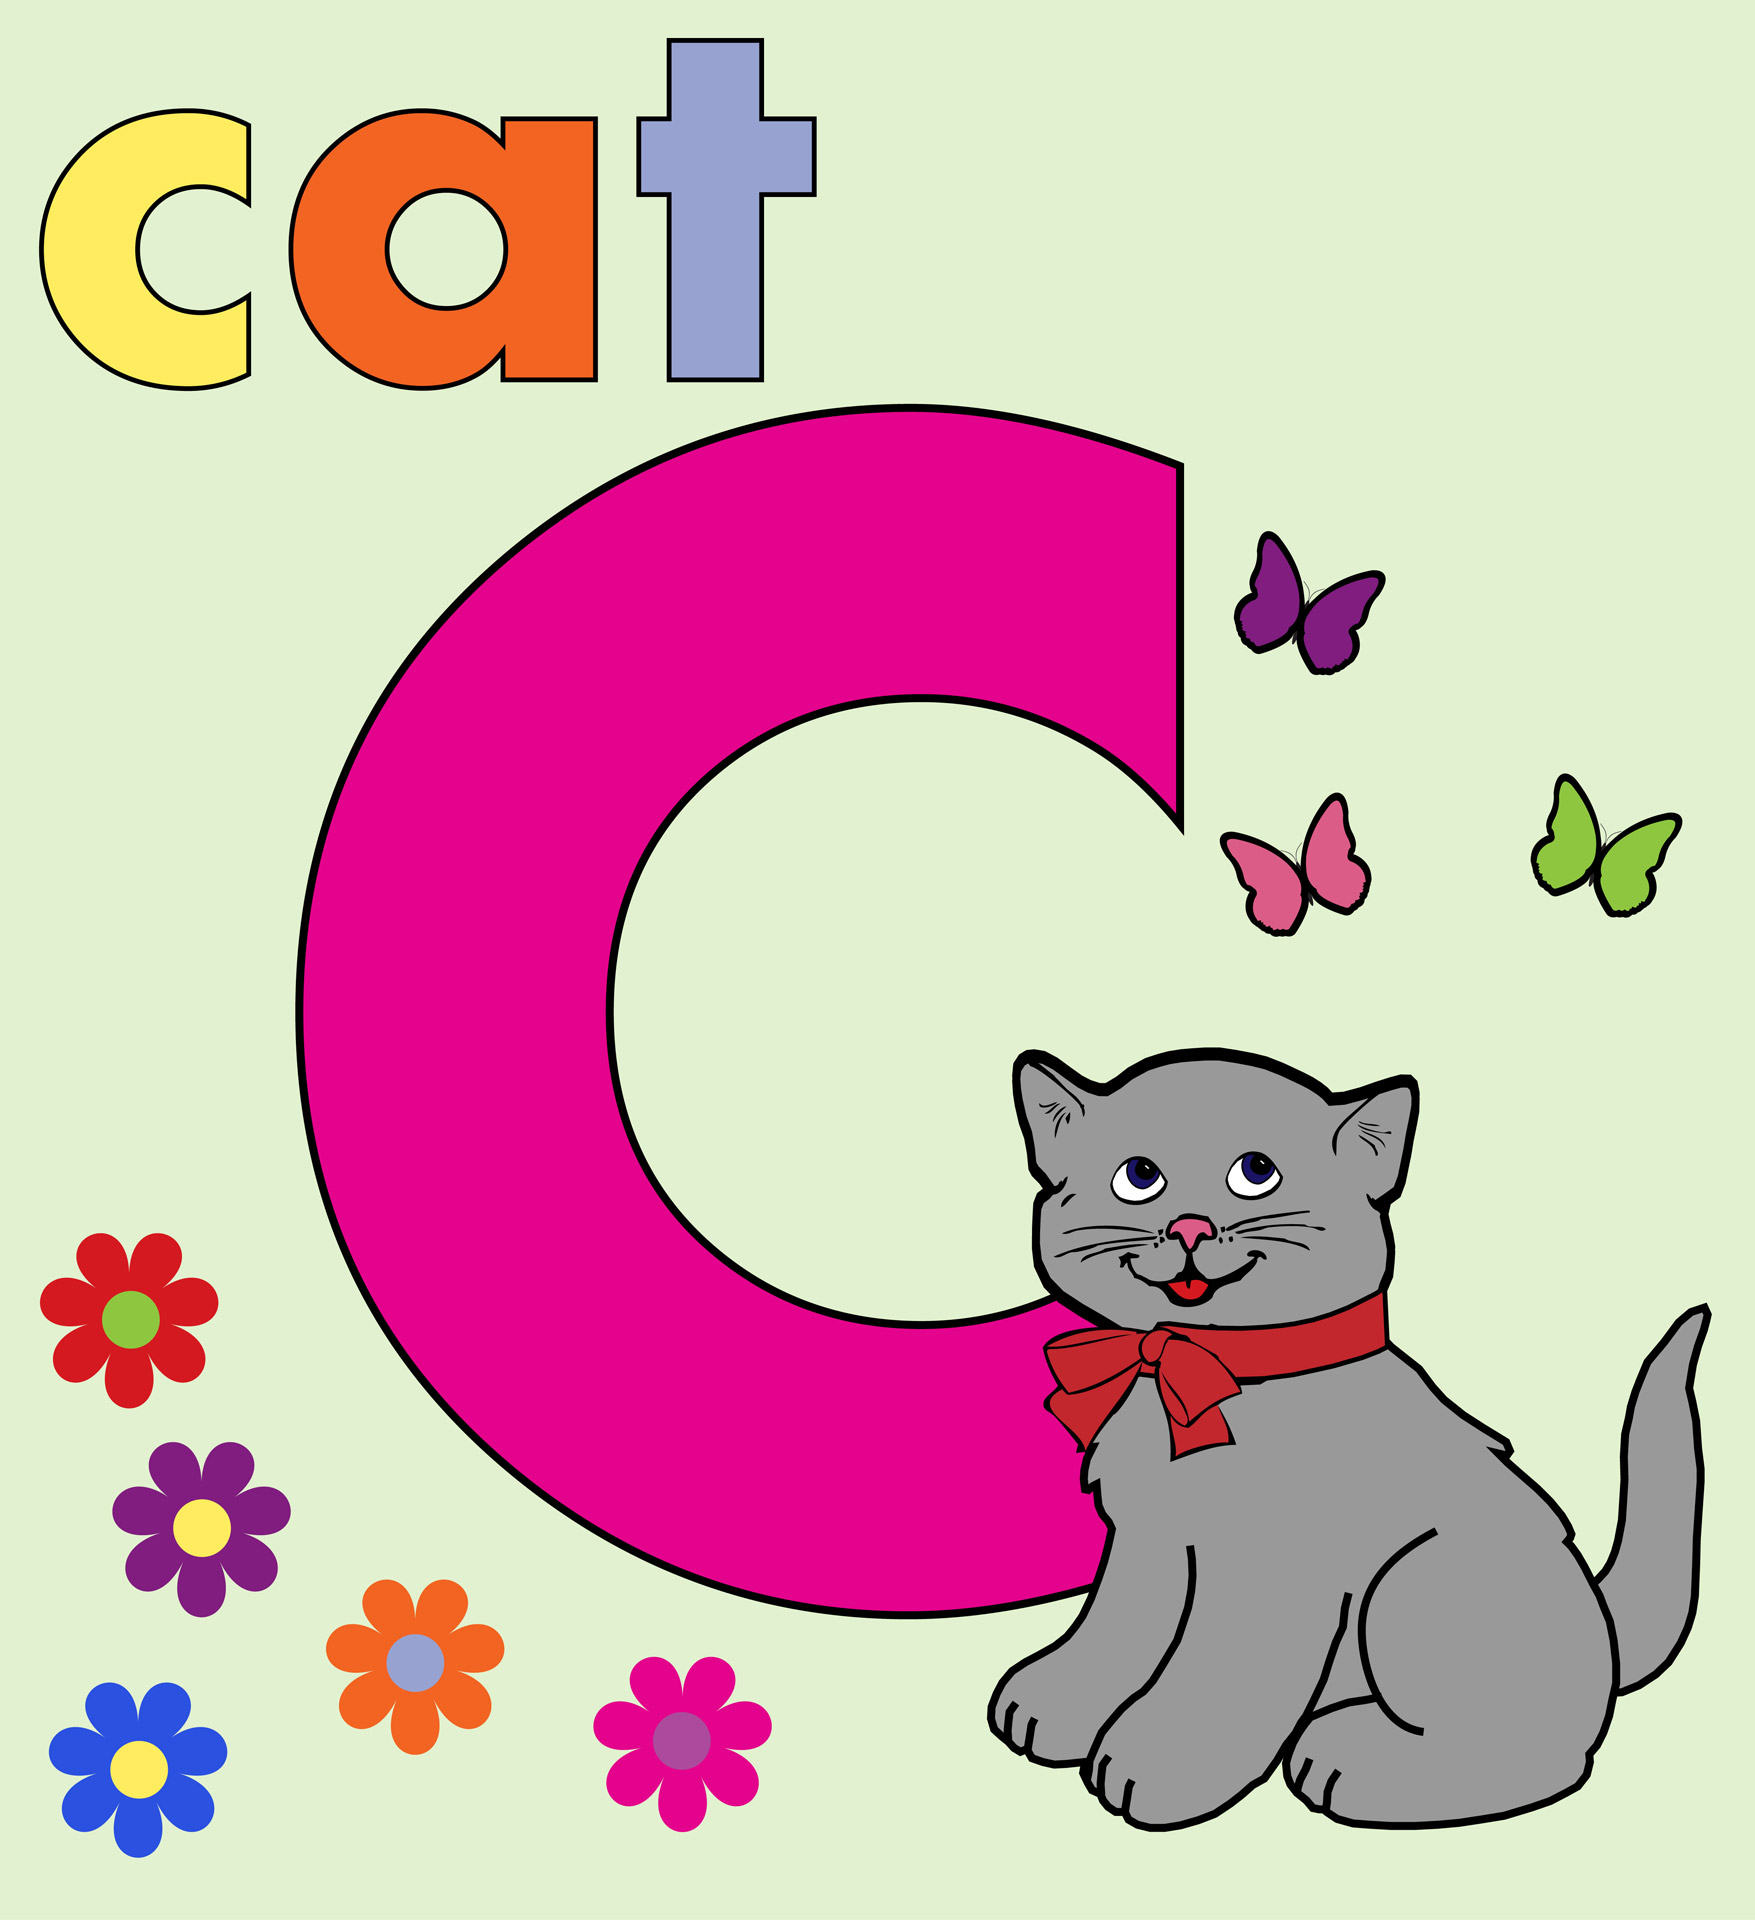 Cute kitten cat with alphabet letter C for kids